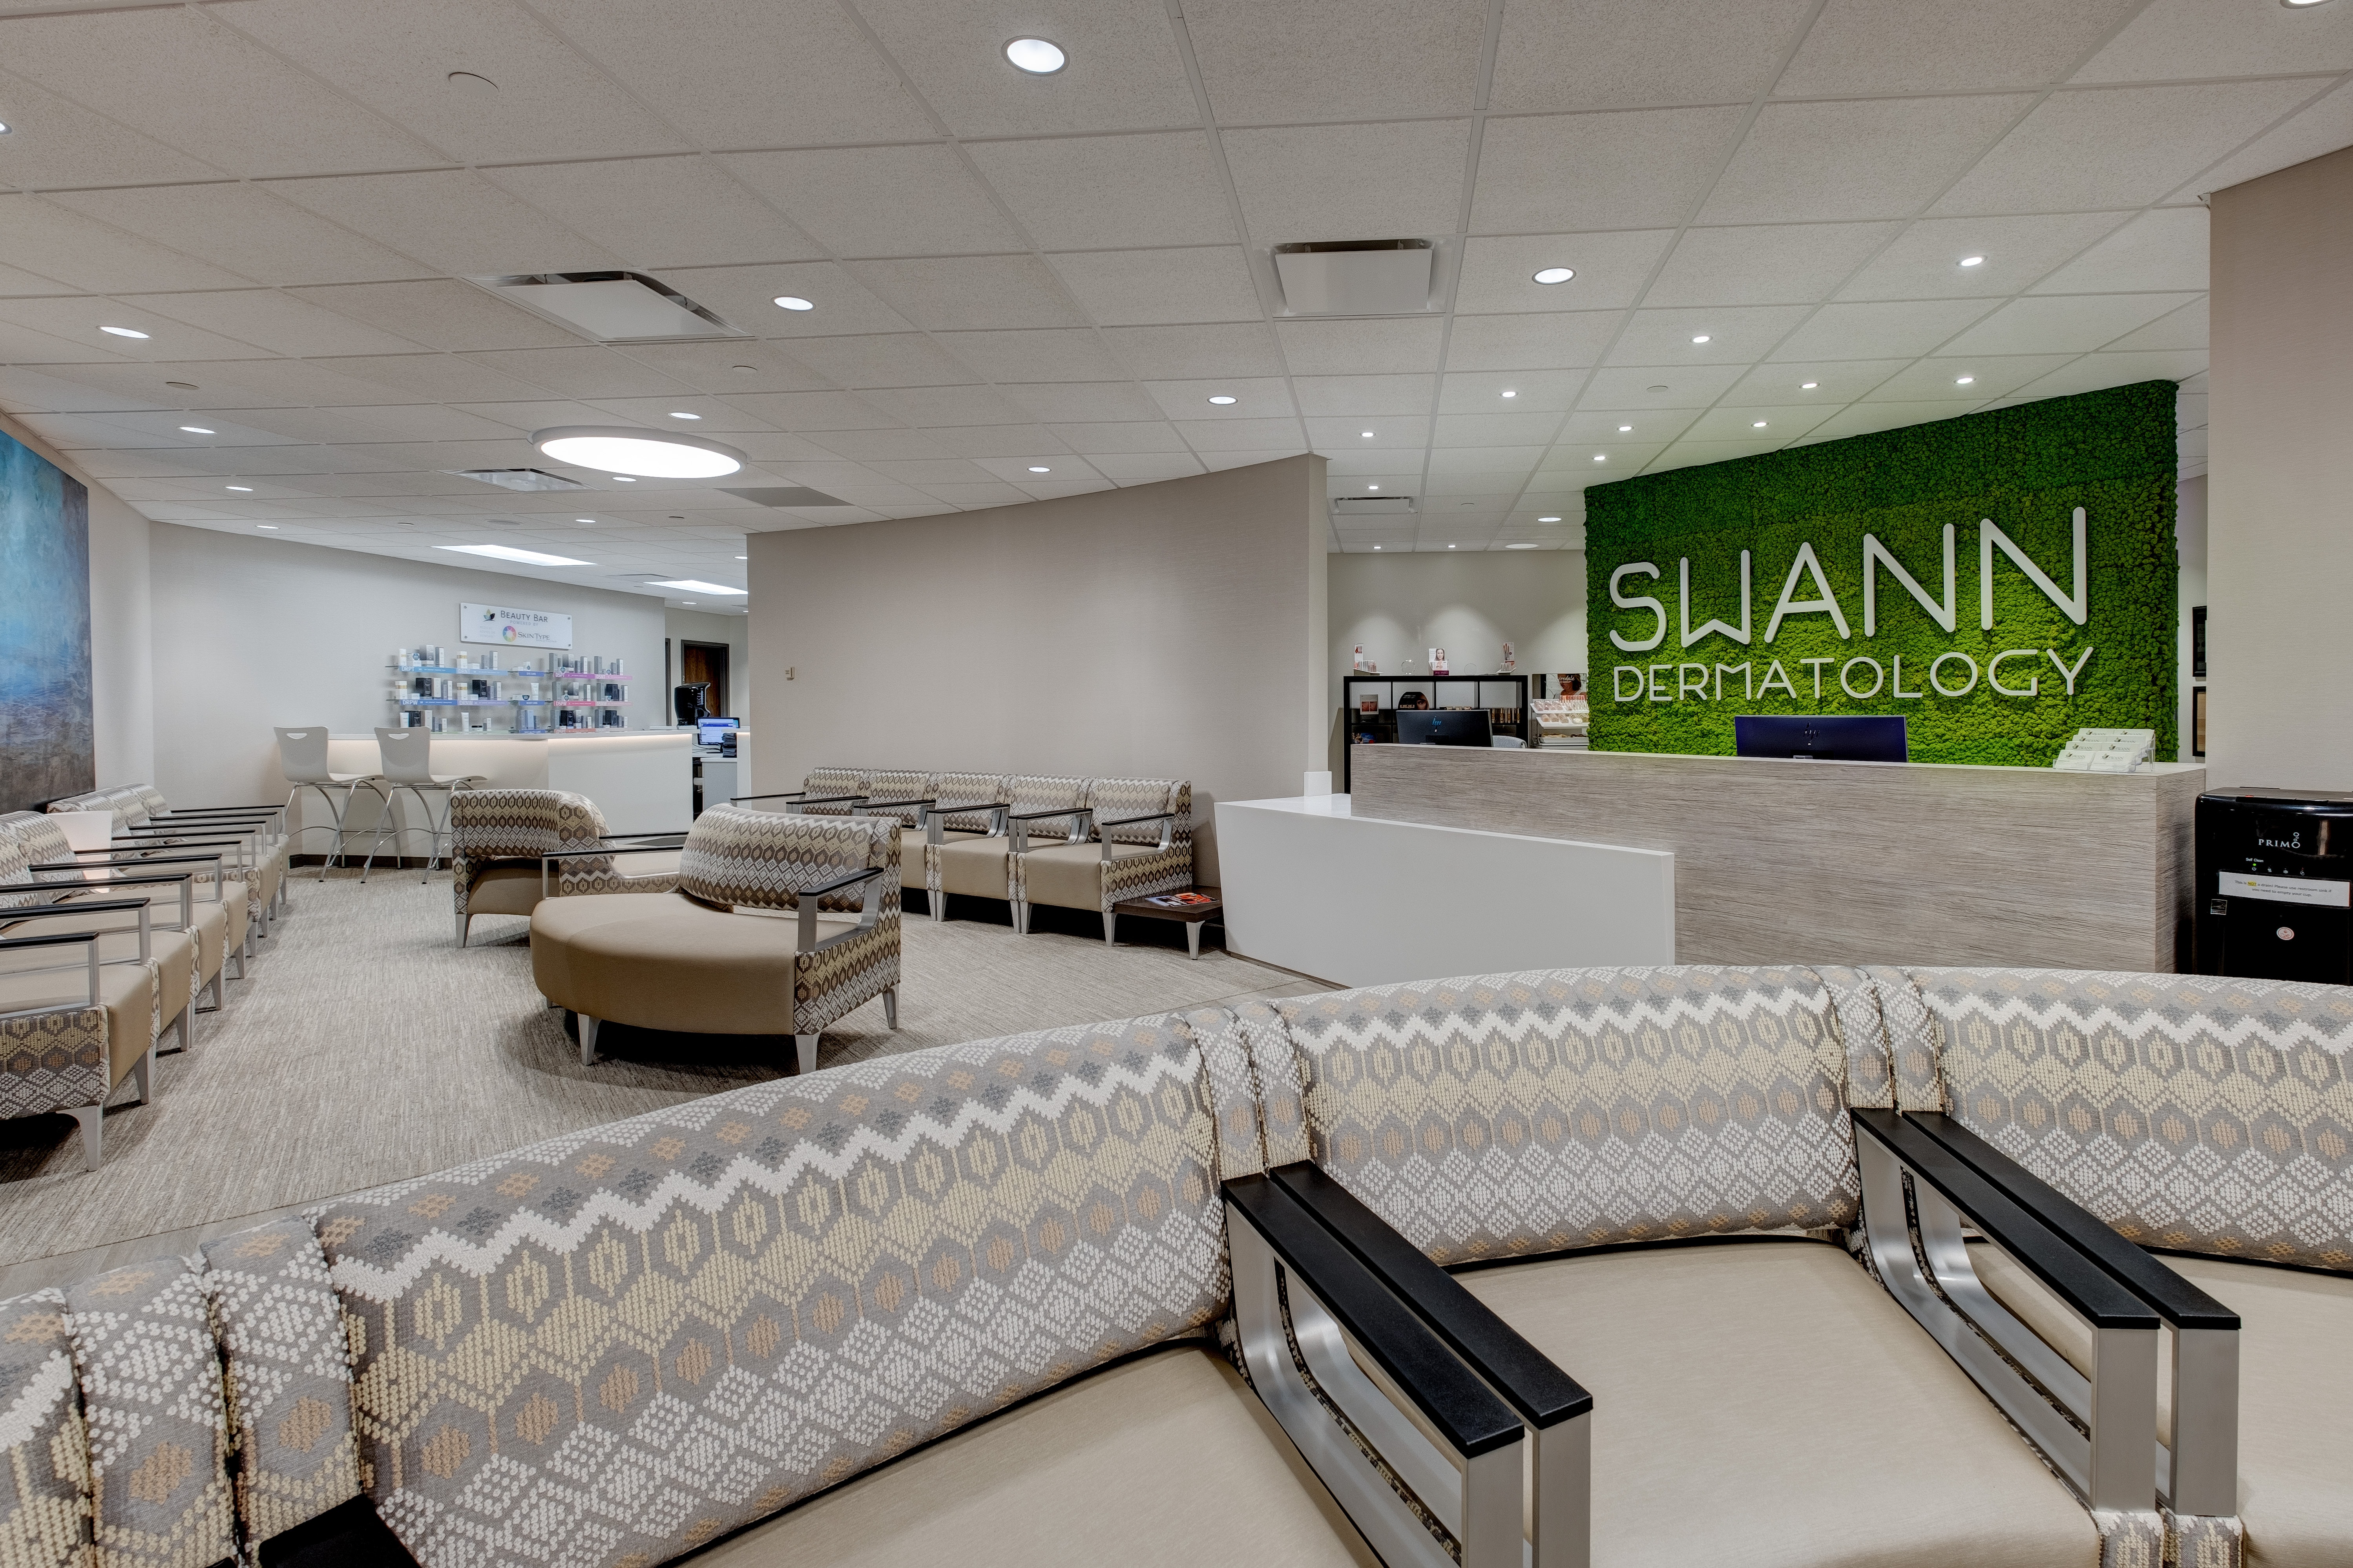 Swann Dermatology & Esthetics - Springfield, MO, US, skin cancer and dermatology center